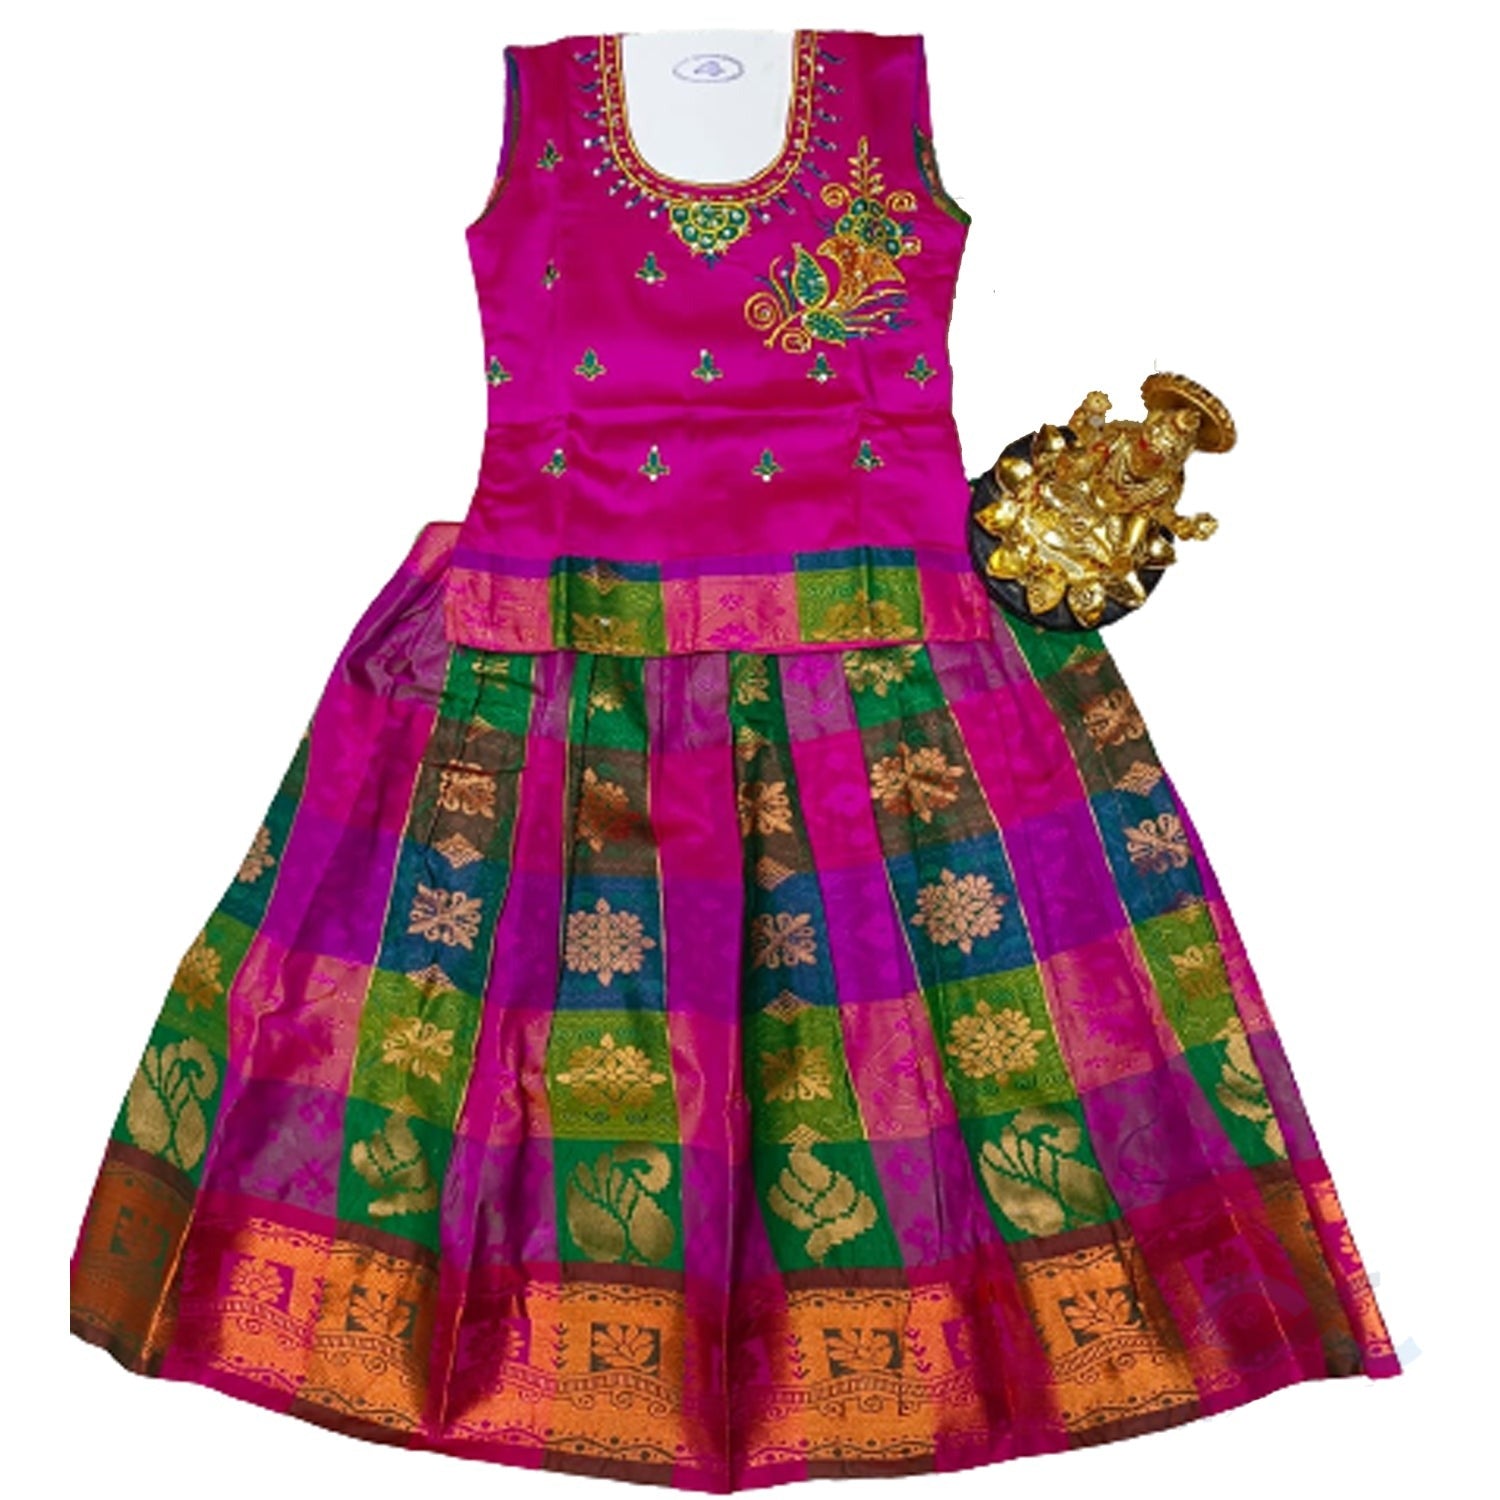 Baby Girl Dress 4 Years ราคาถูก ซื้อออนไลน์ที่ - มี.ค. 2024 | Lazada.co.th